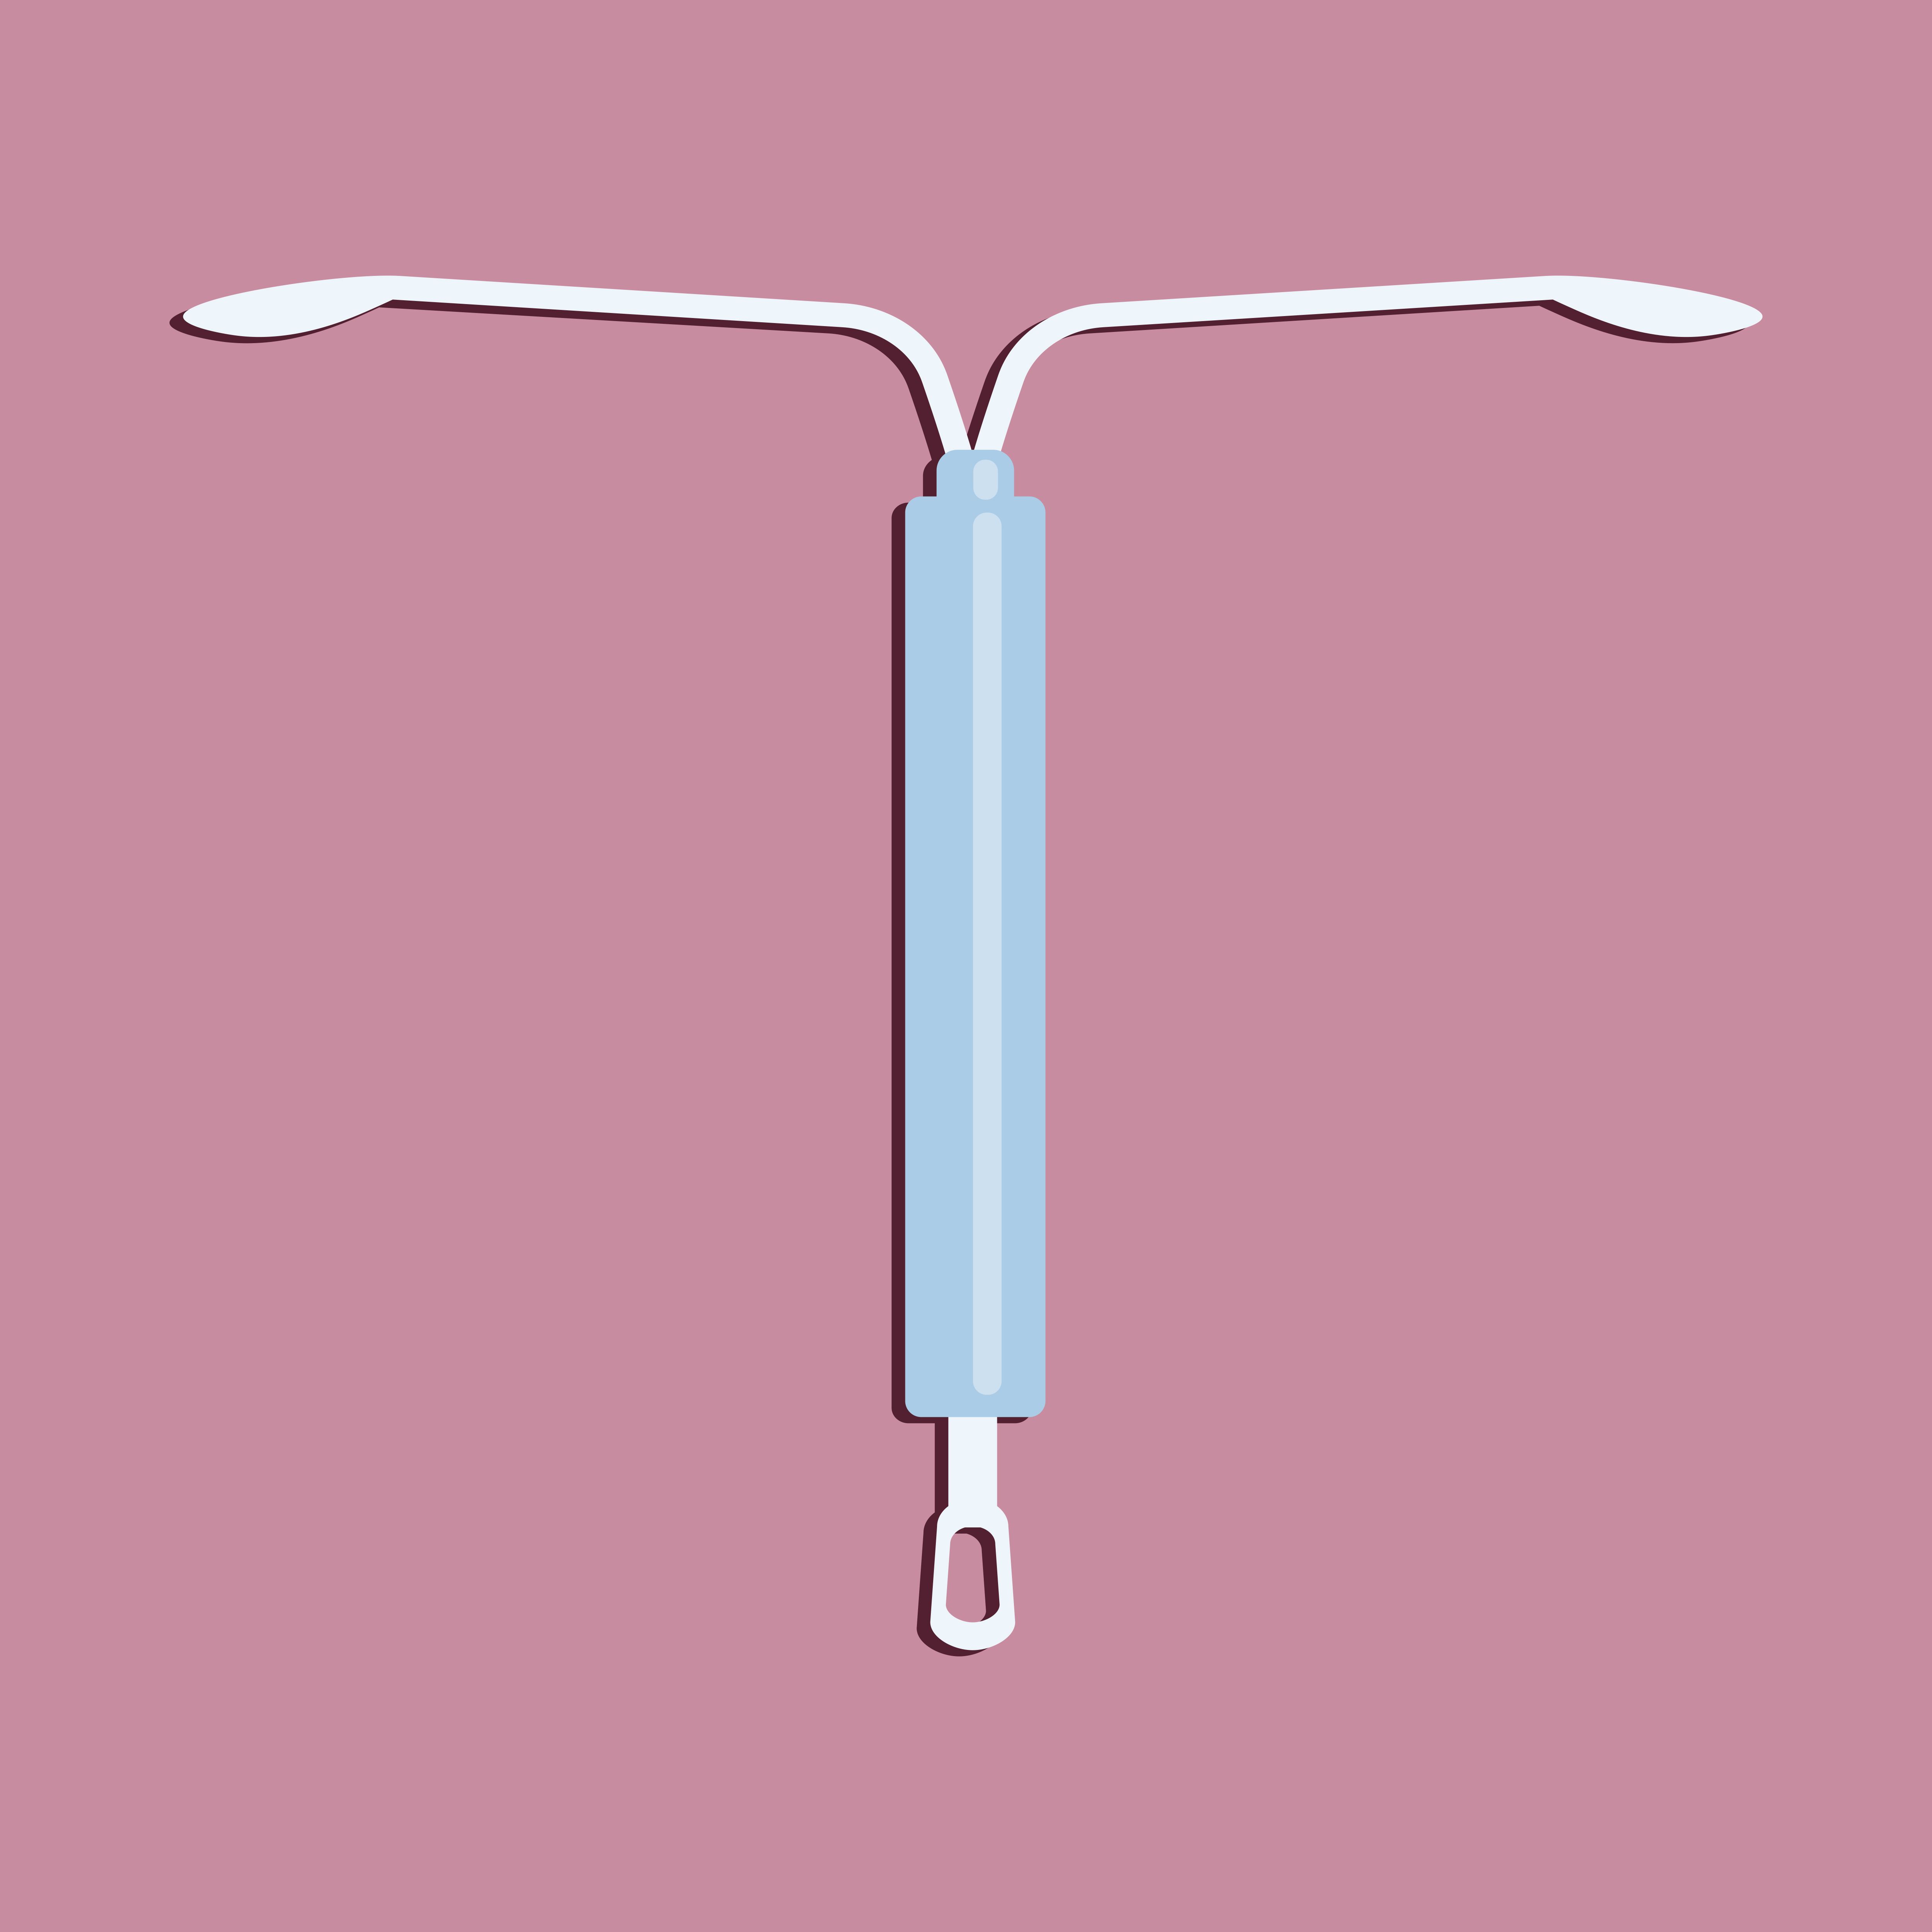 intrauterine device contraceptives method, iud birth control vector illustration flat design